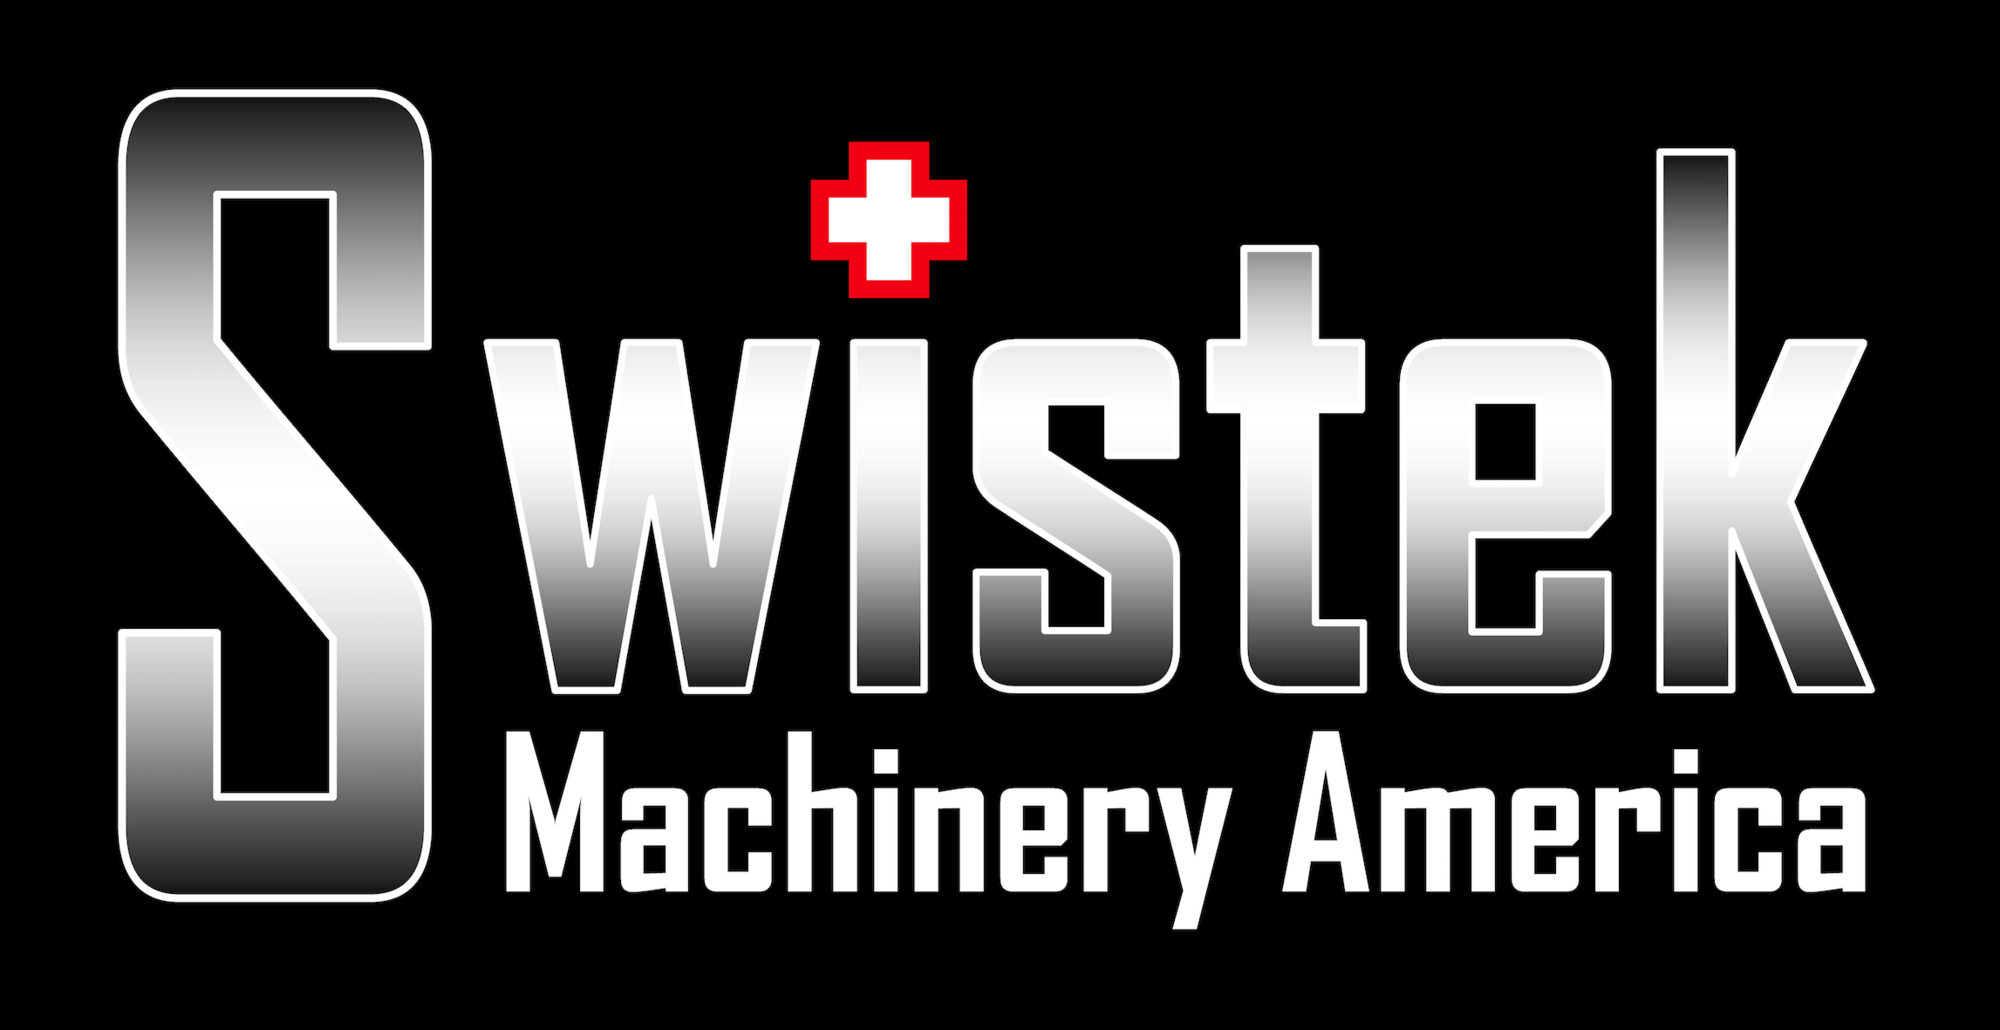 Swistek Machinery America association 10